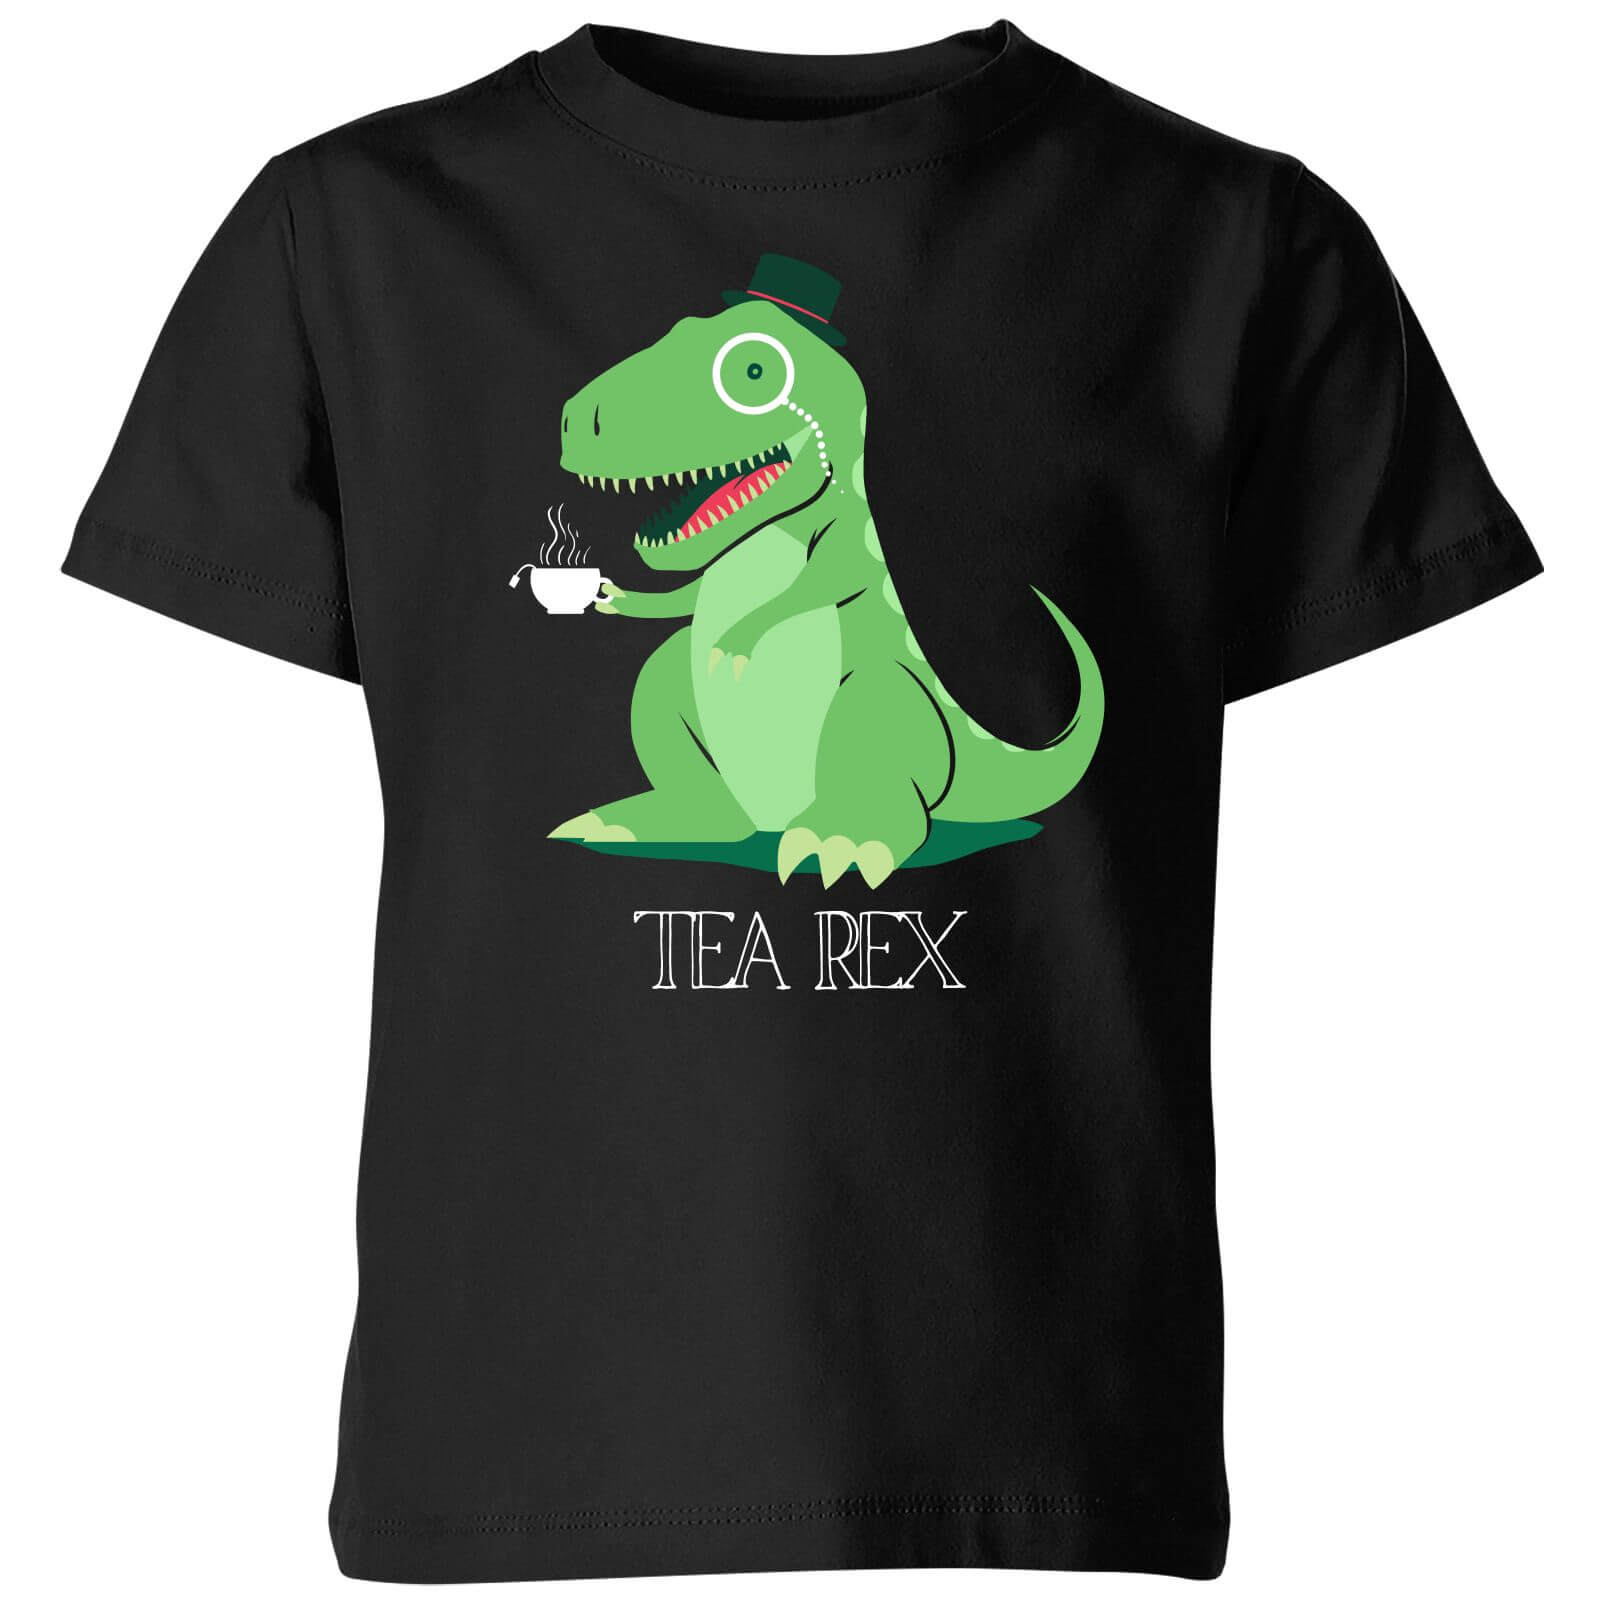 Tea Rex Kids' T-Shirt - Black - 3-4 Years - Black